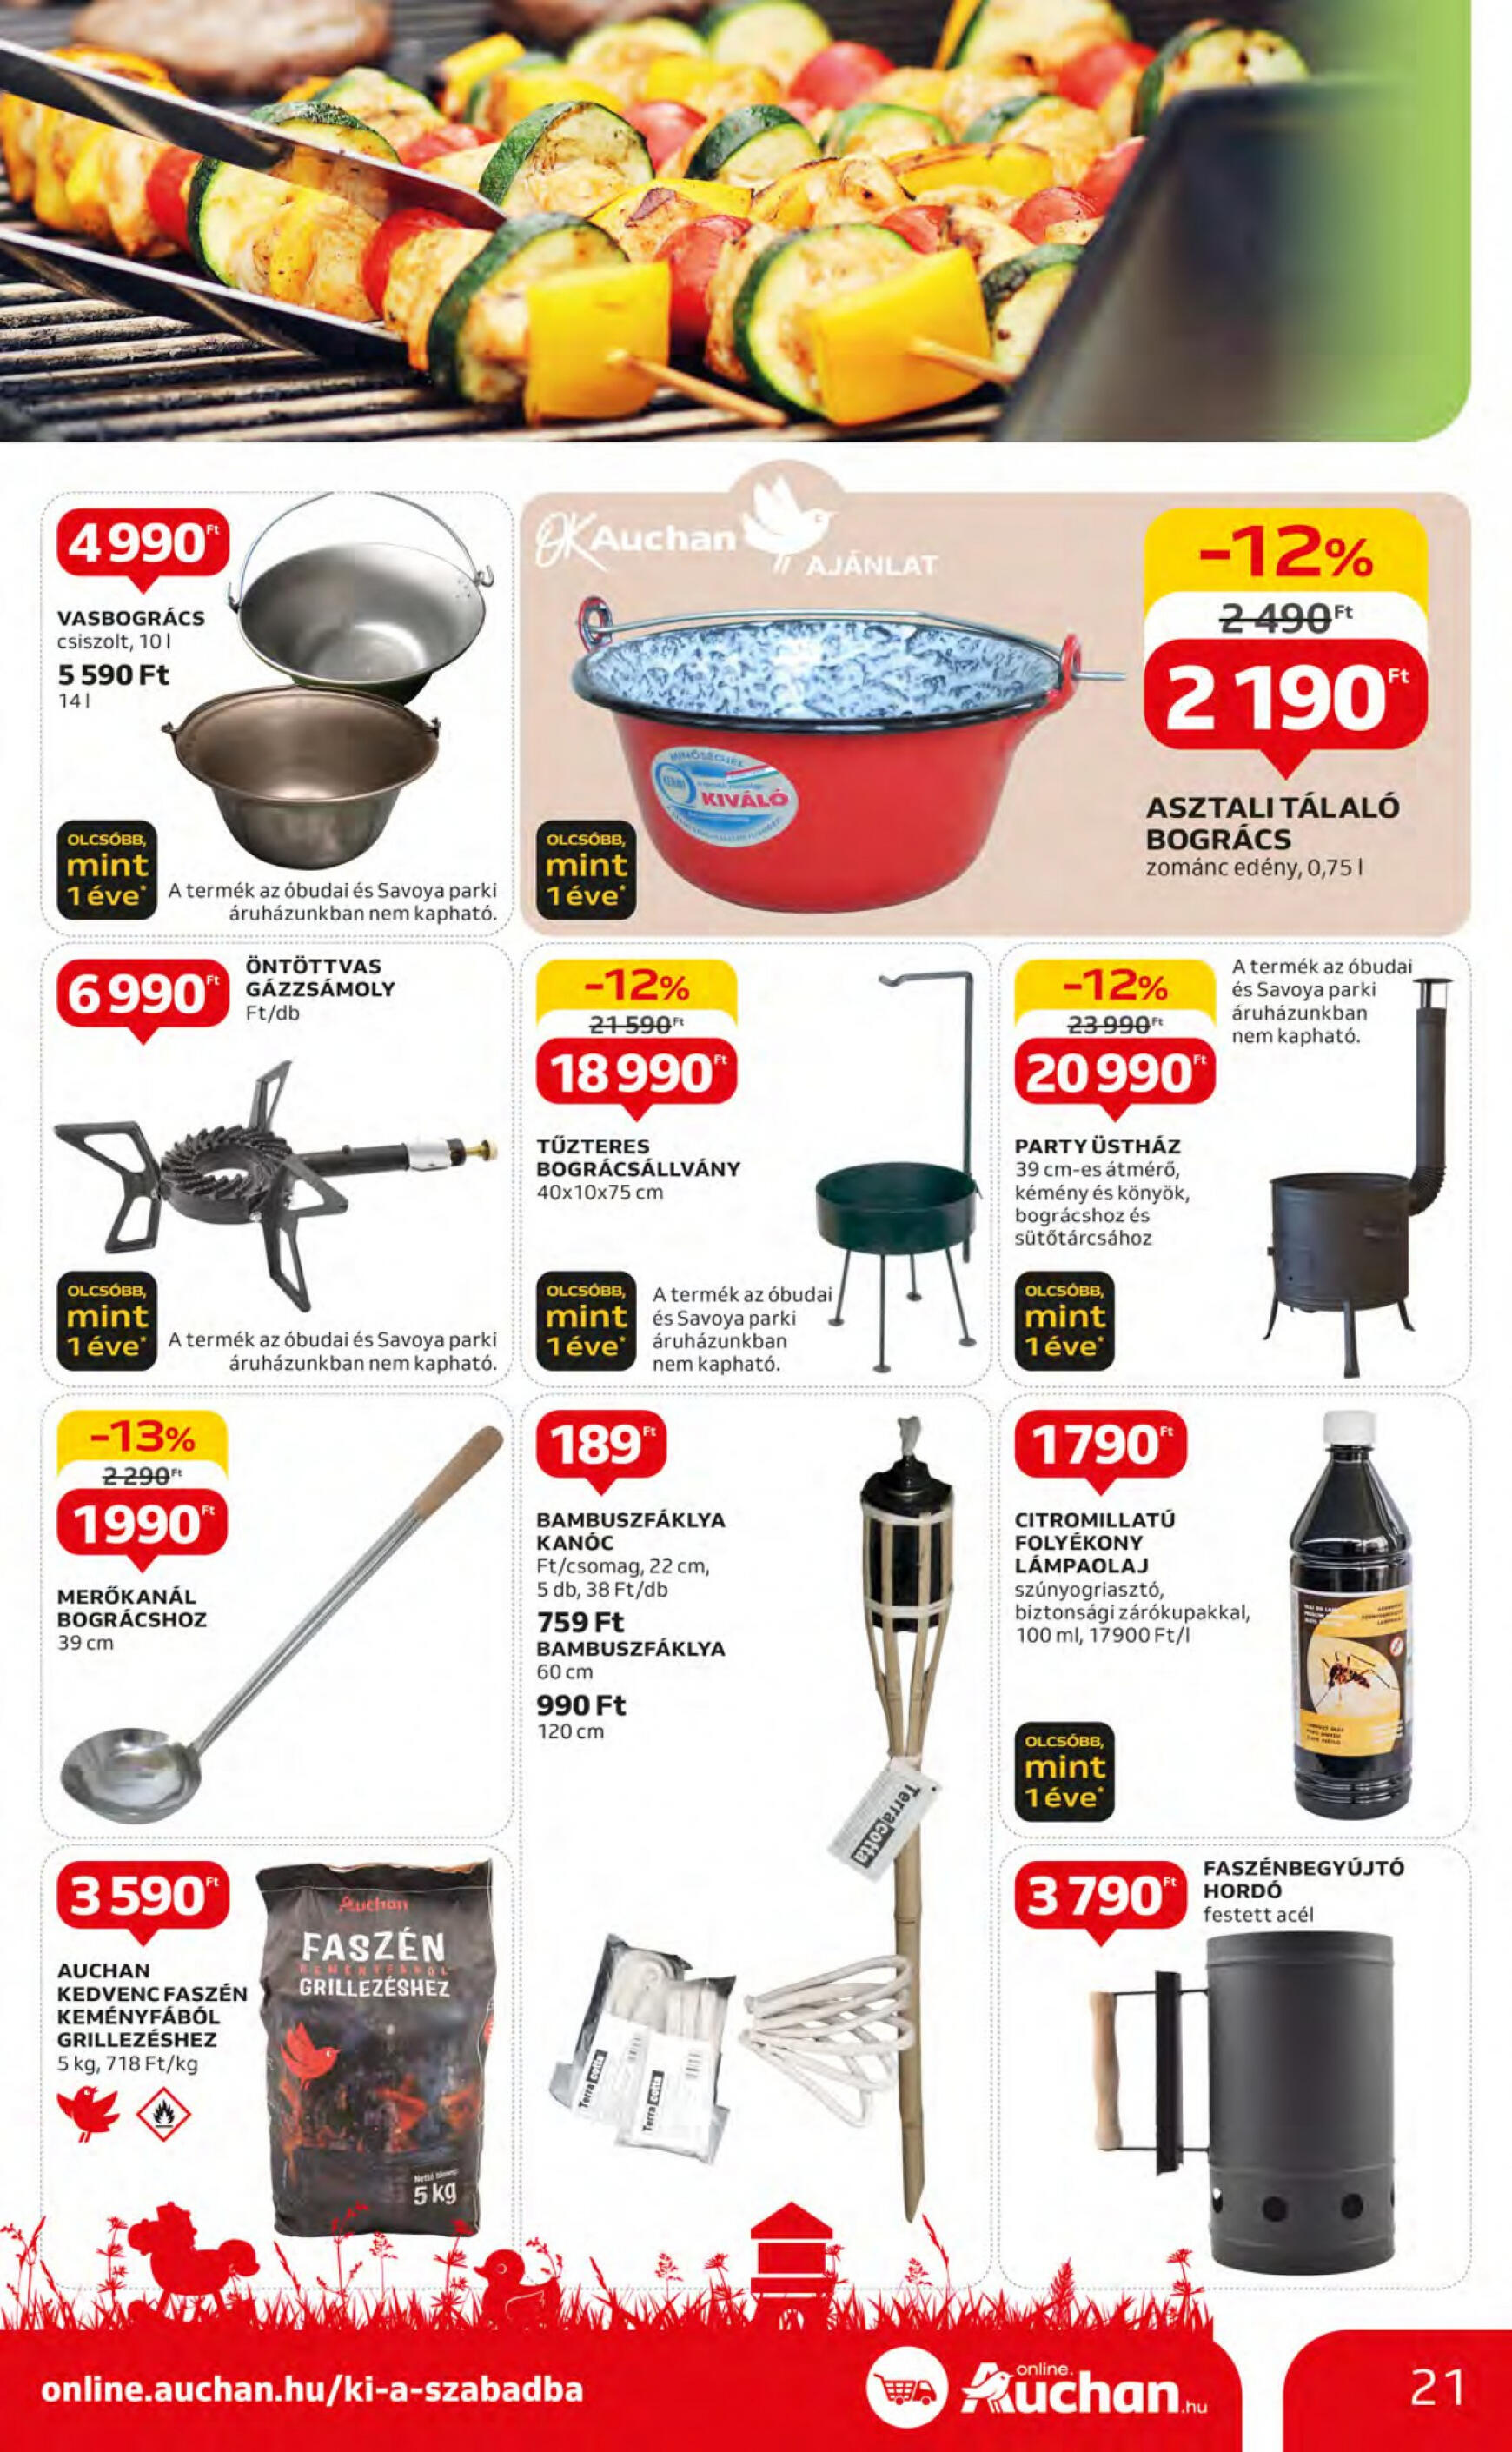 auchan - Aktuális újság Auchan - 05.02. - 05.22. - page: 21